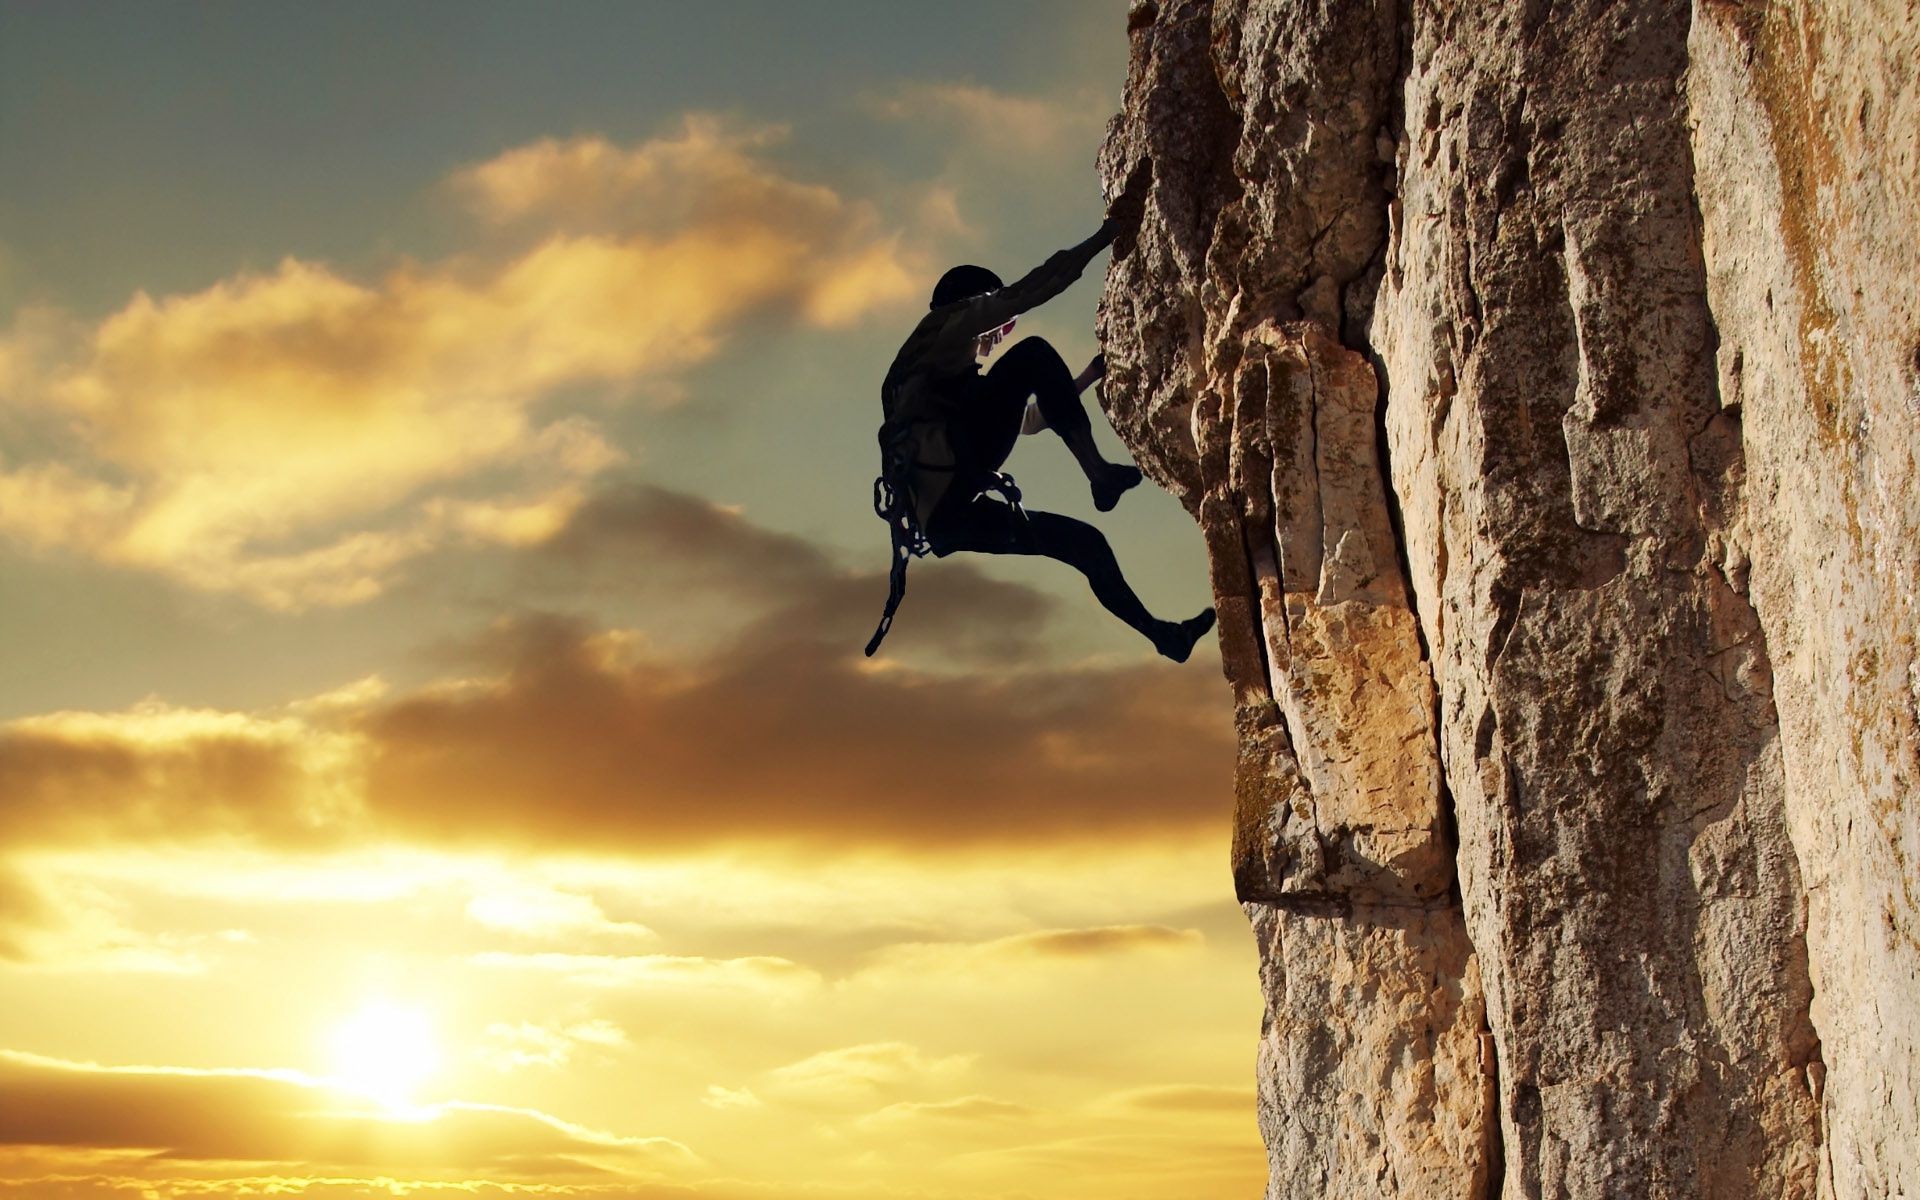 sports climb climber sunset rock climbing challenge sky determination adventure courage accomplishment effort outdoors persistence action dawn